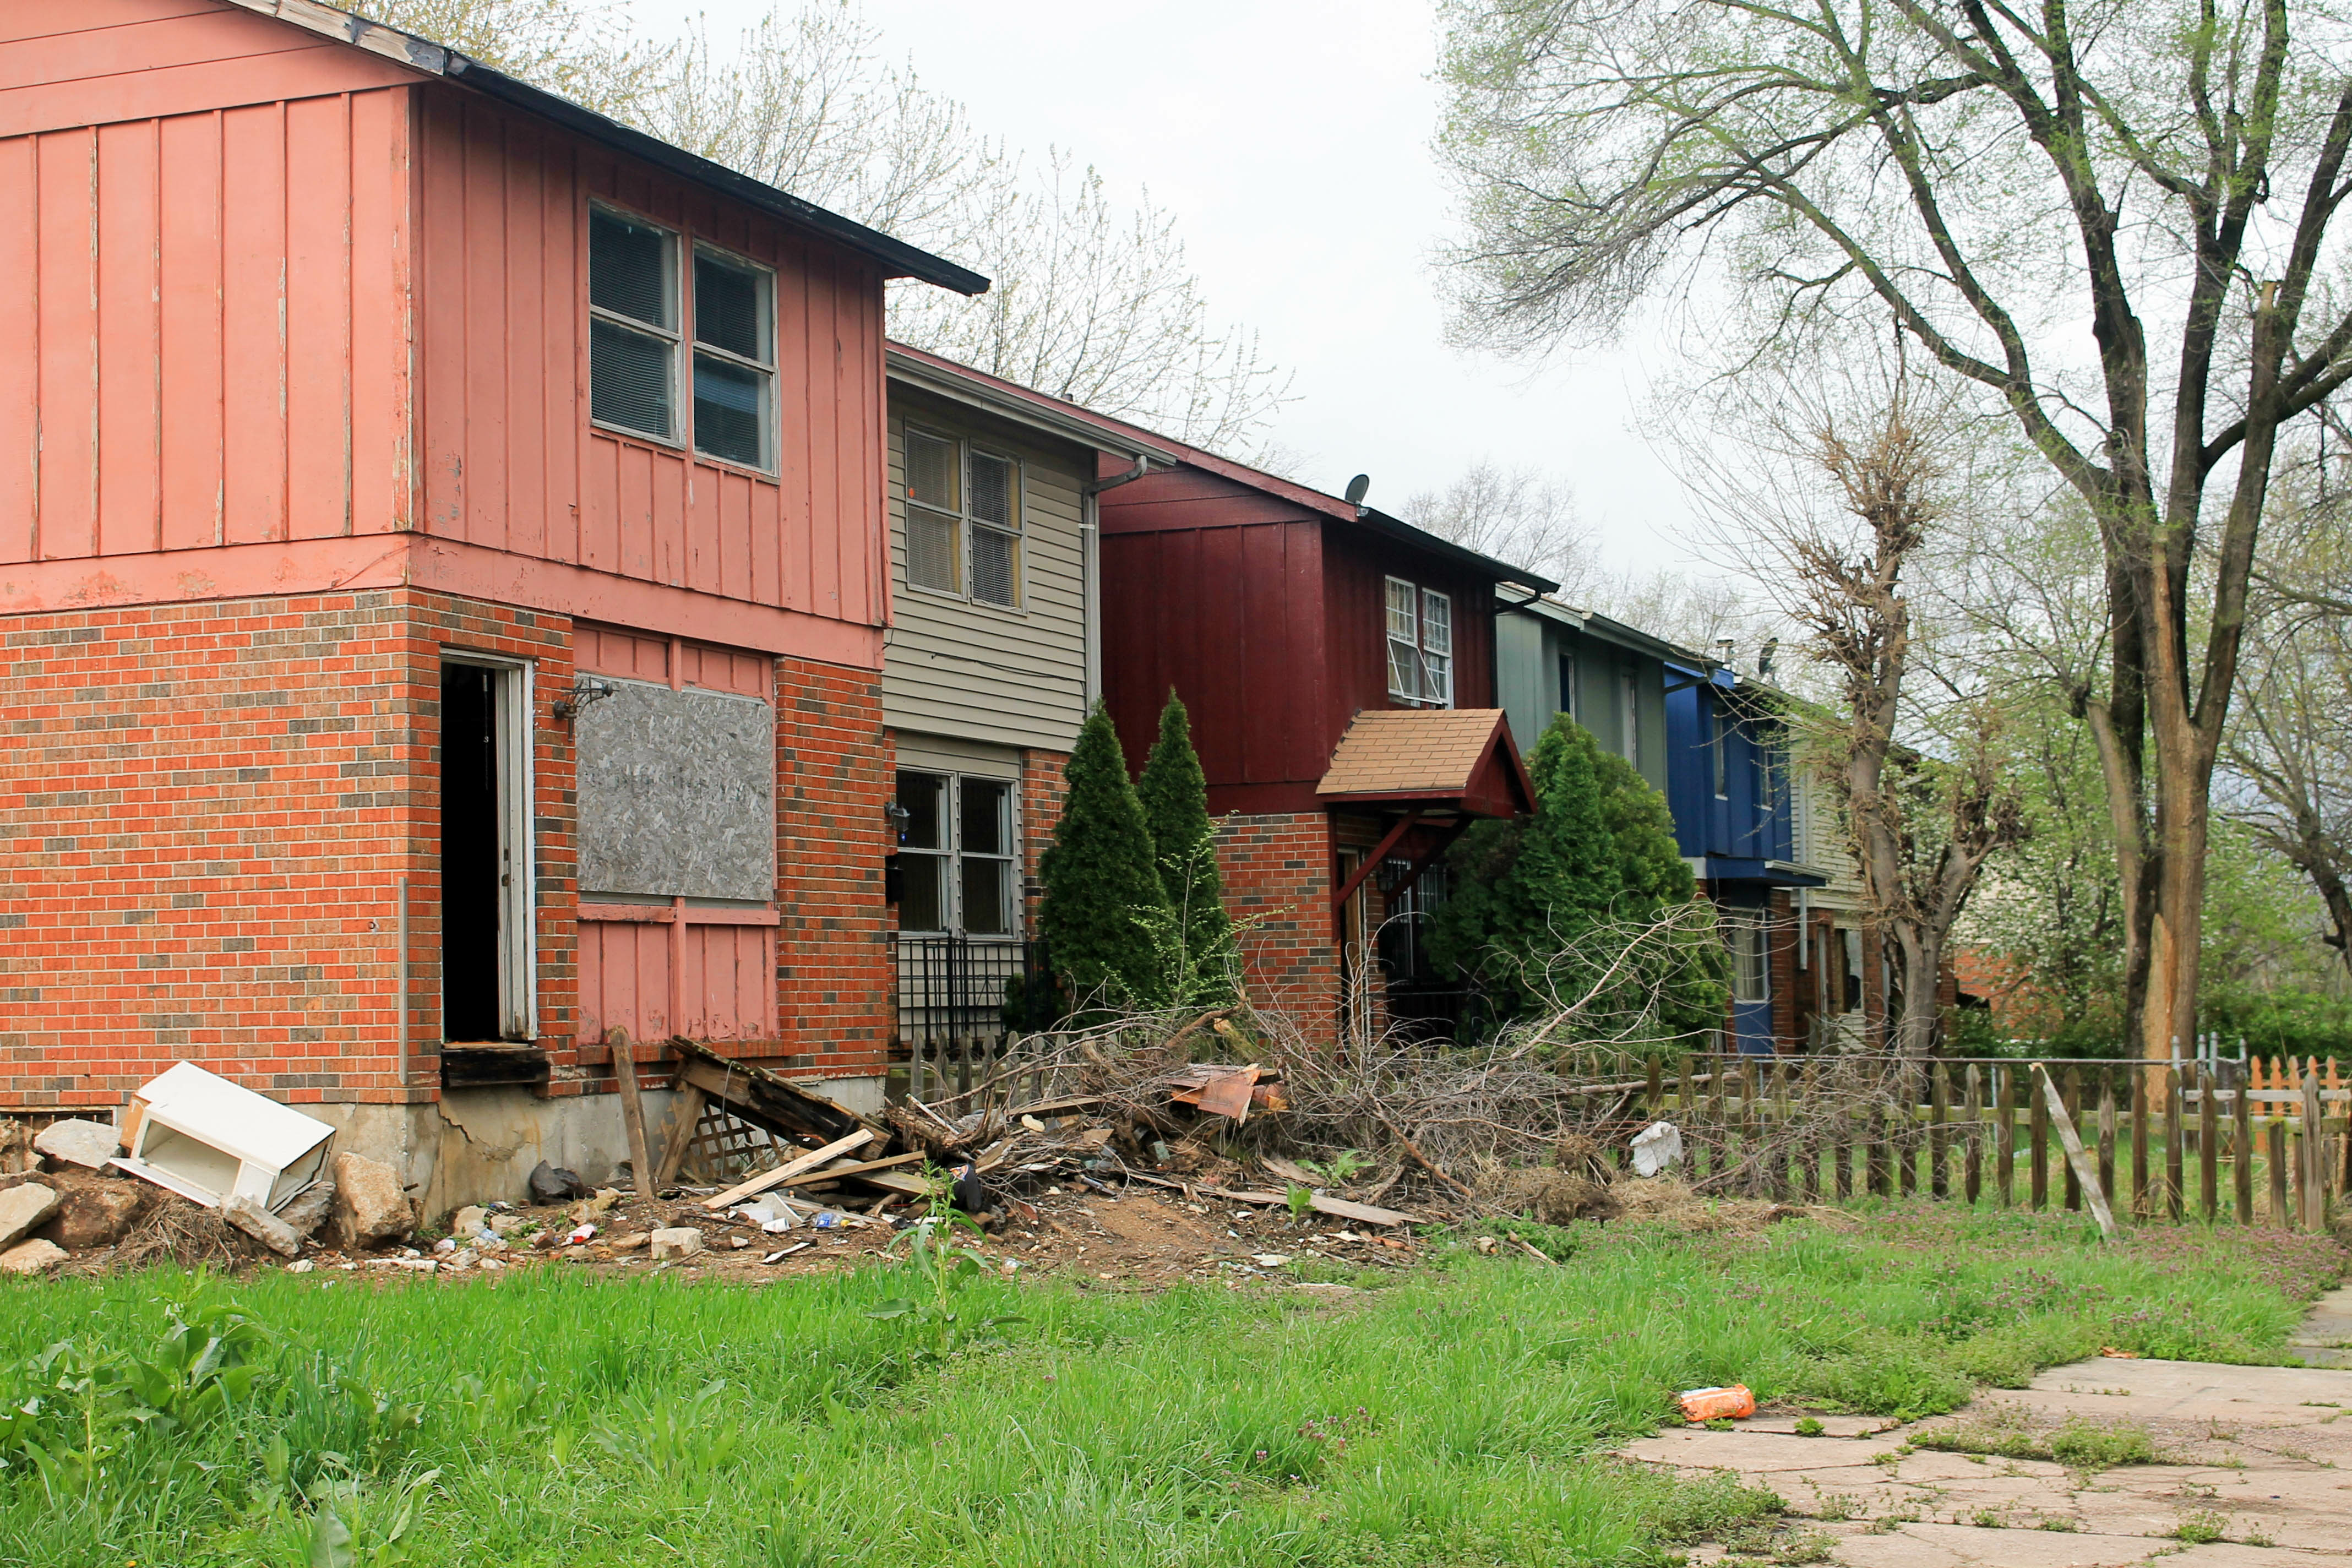 multi unit row of housing in disrepair